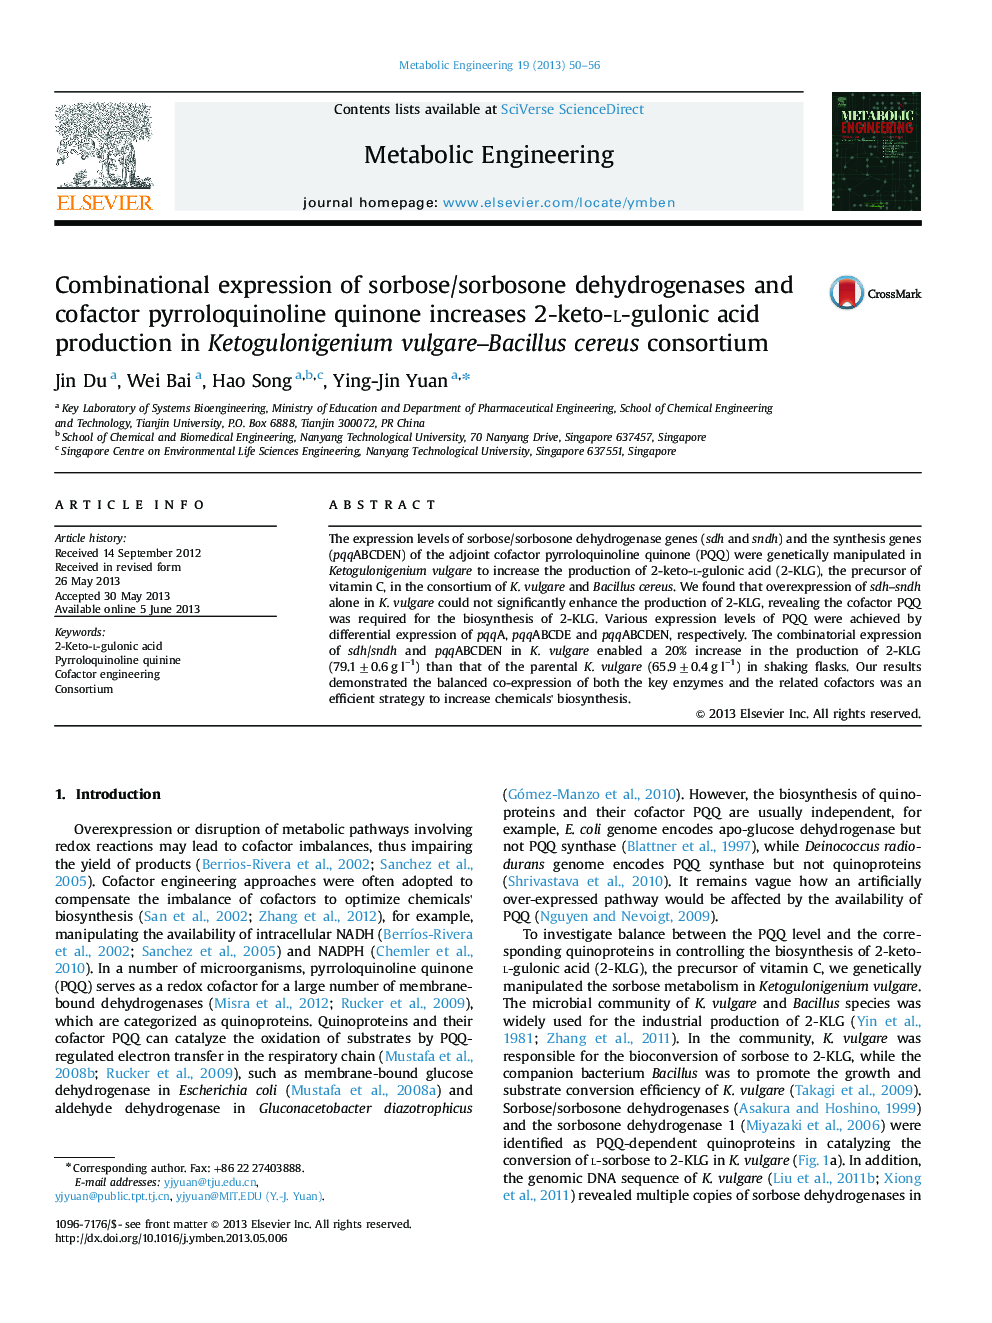 Combinational expression of sorbose/sorbosone dehydrogenases and cofactor pyrroloquinoline quinone increases 2-keto-l-gulonic acid production in Ketogulonigenium vulgare-Bacillus cereus consortium